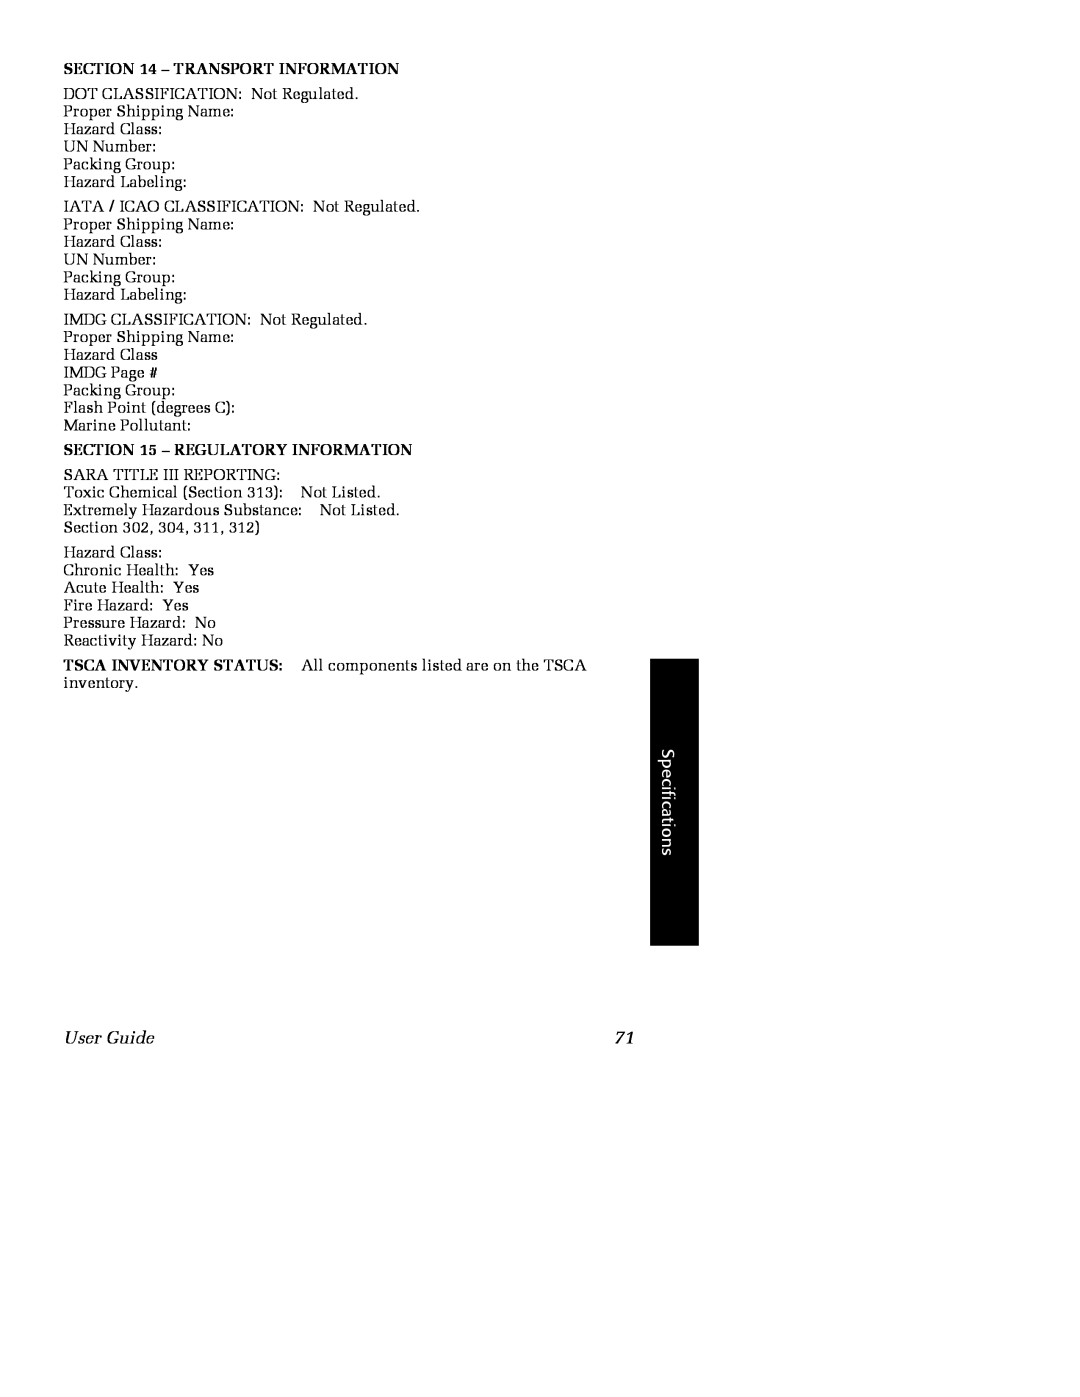 Xerox Phaser 2135 manual Specifications, User Guide, Transport Information, Regulatory Information 